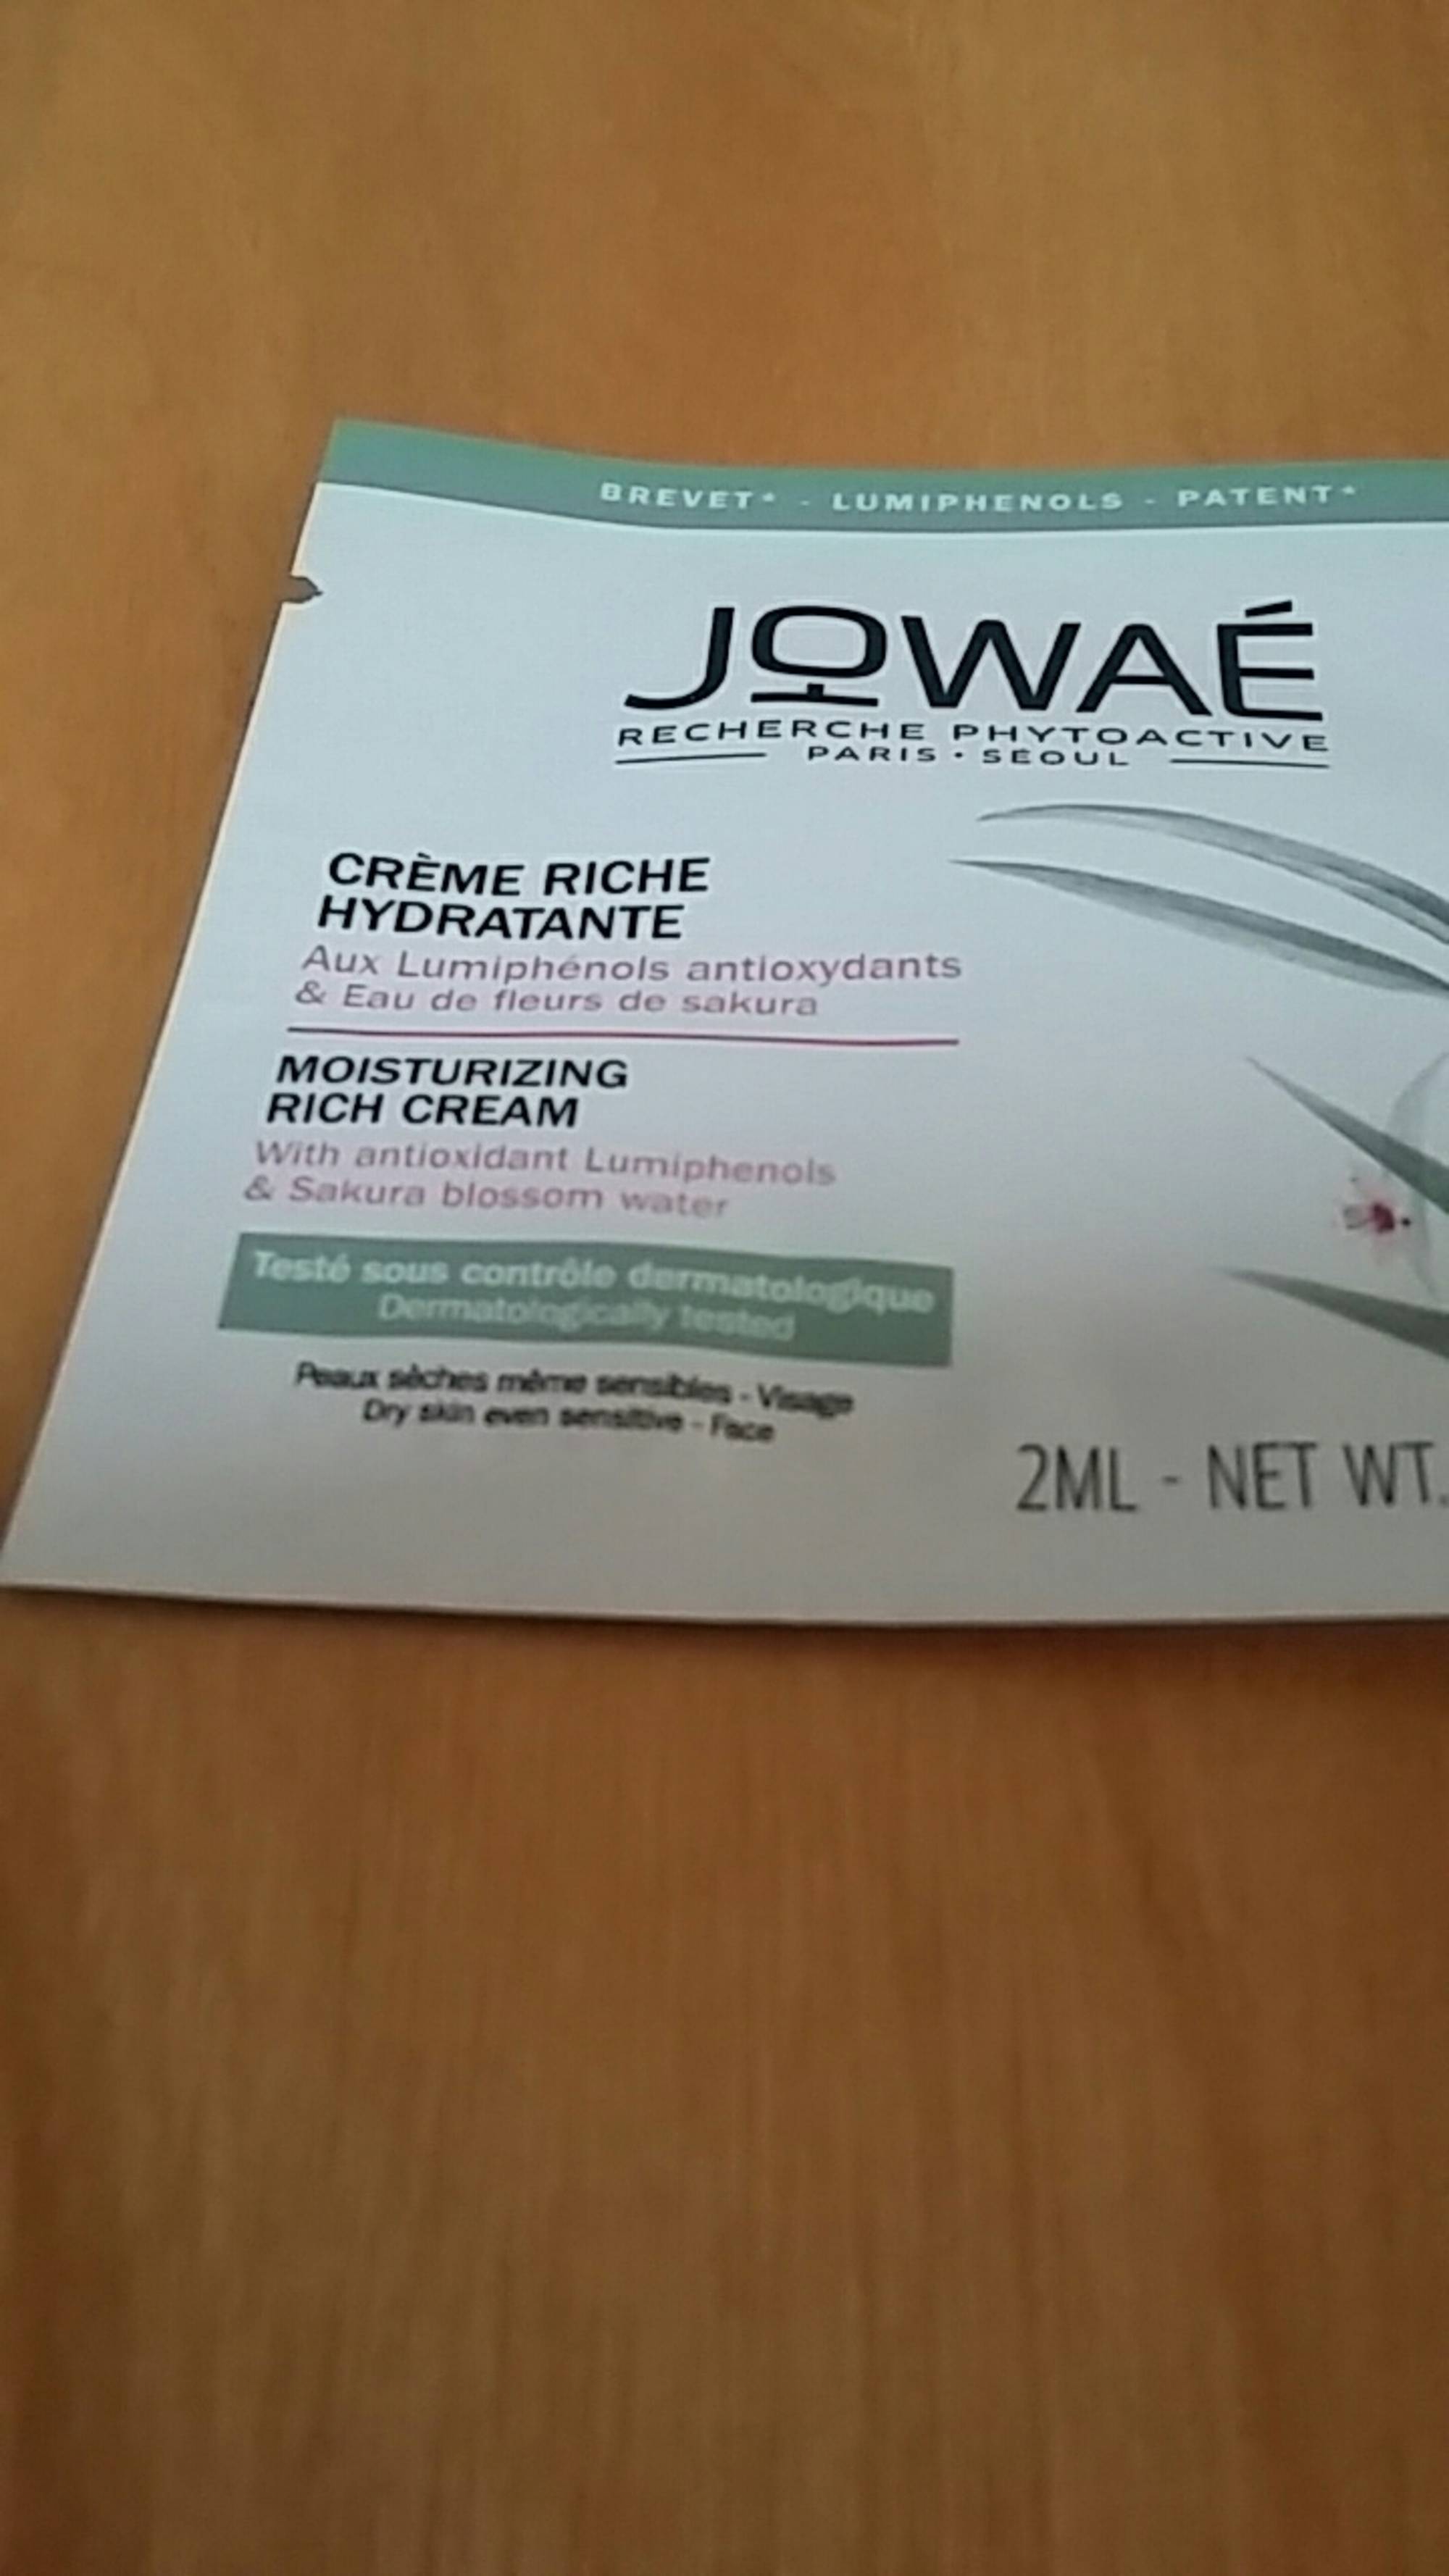 JOWAÉ - Crème riche hydratante